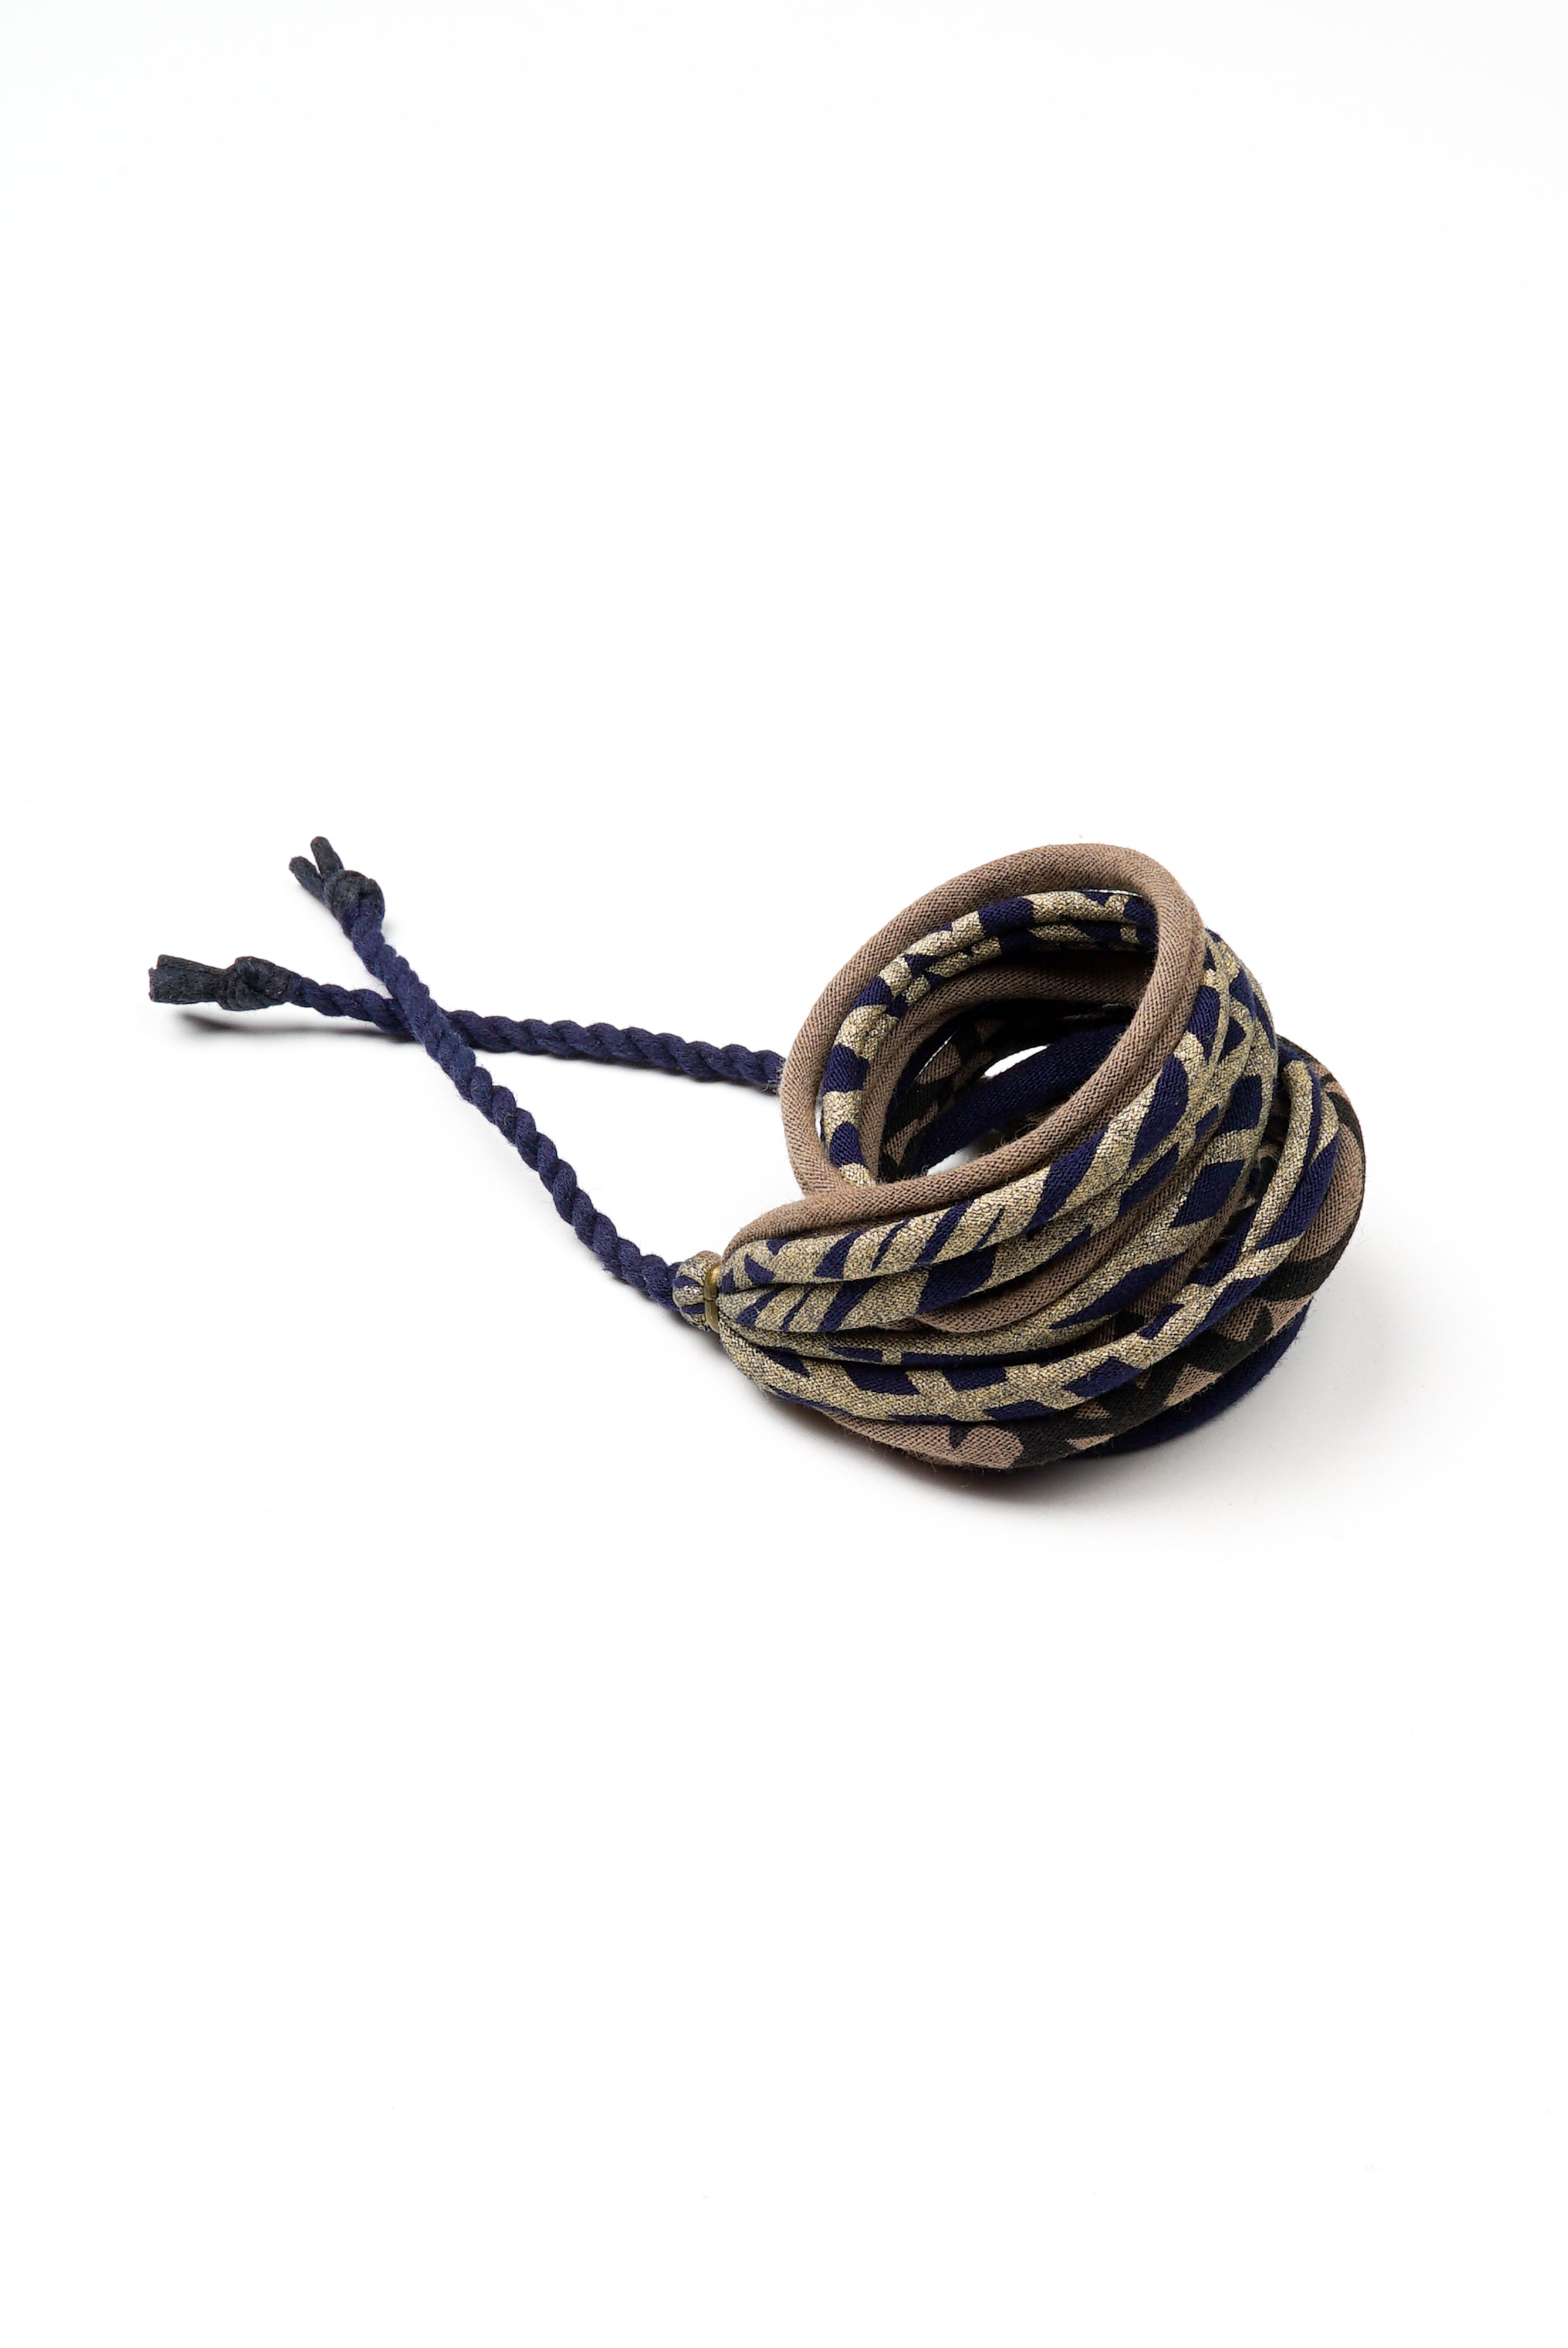 Necklush Wrap Bracelet / Navy Blue & Gold / Unisex